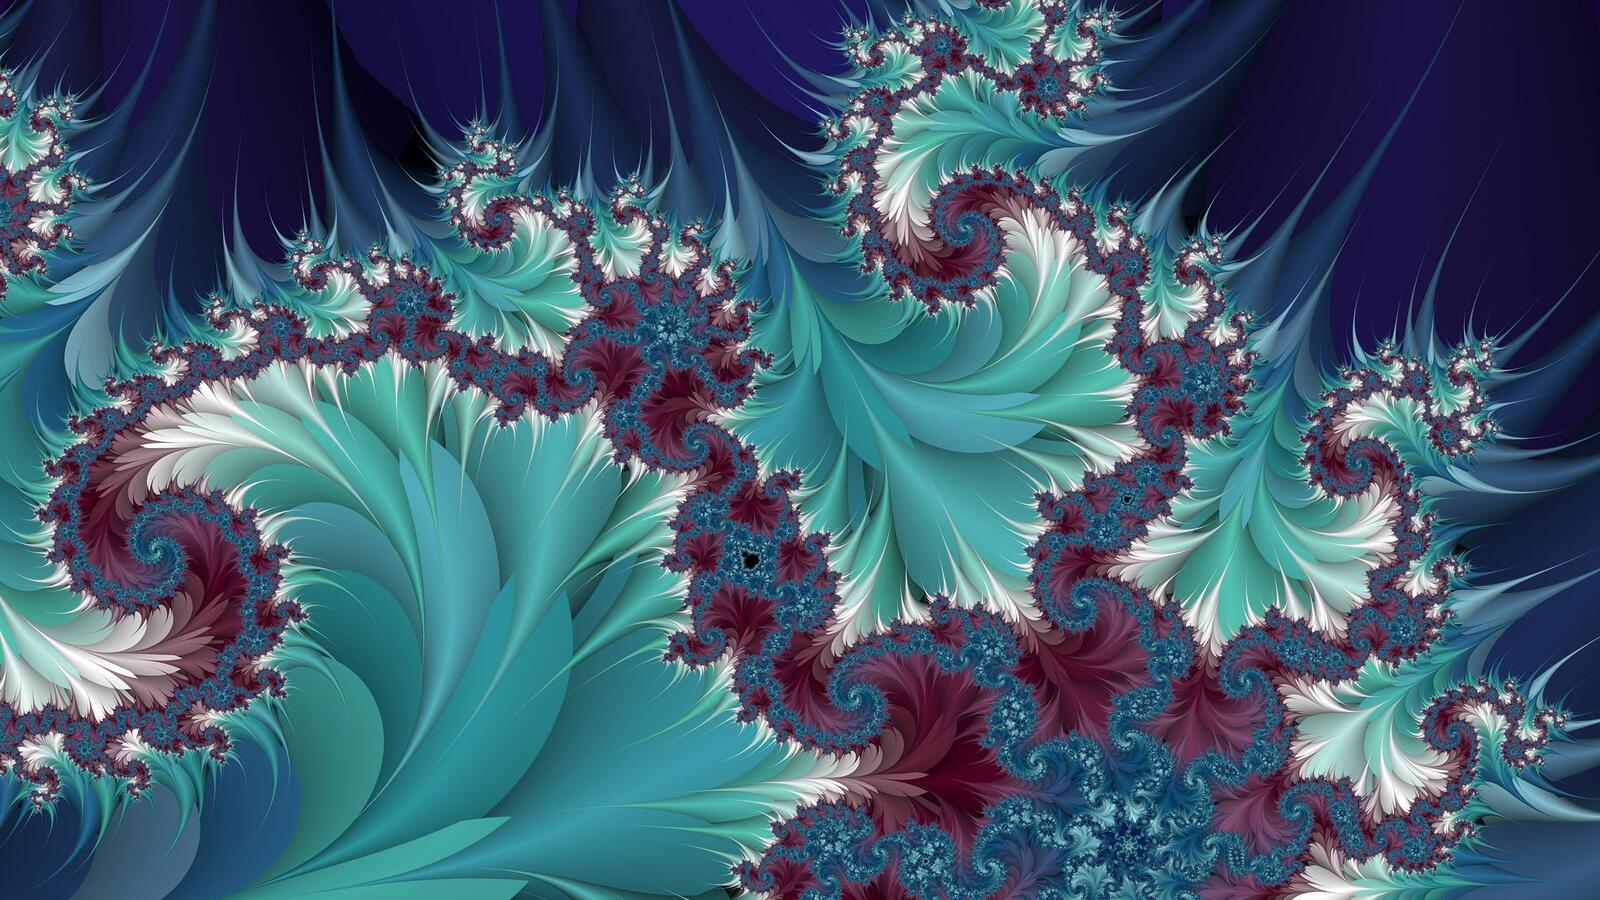 Wallpapers geometric shapes wallpaper nested fractal design on the desktop